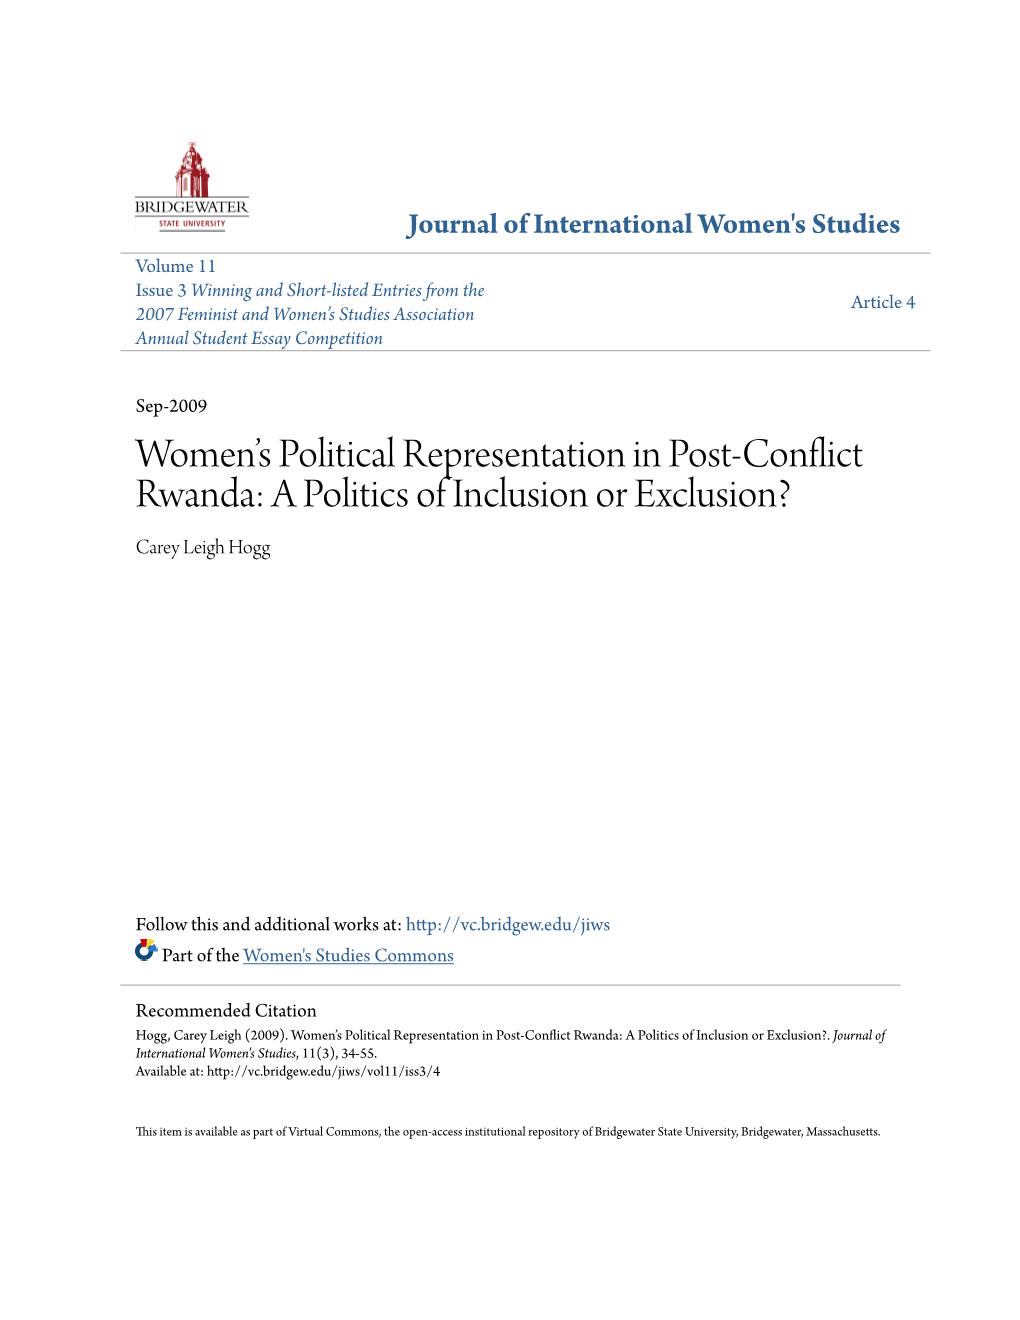 Women's Political Representation in Post-Conflict Rwanda: a Politics Of